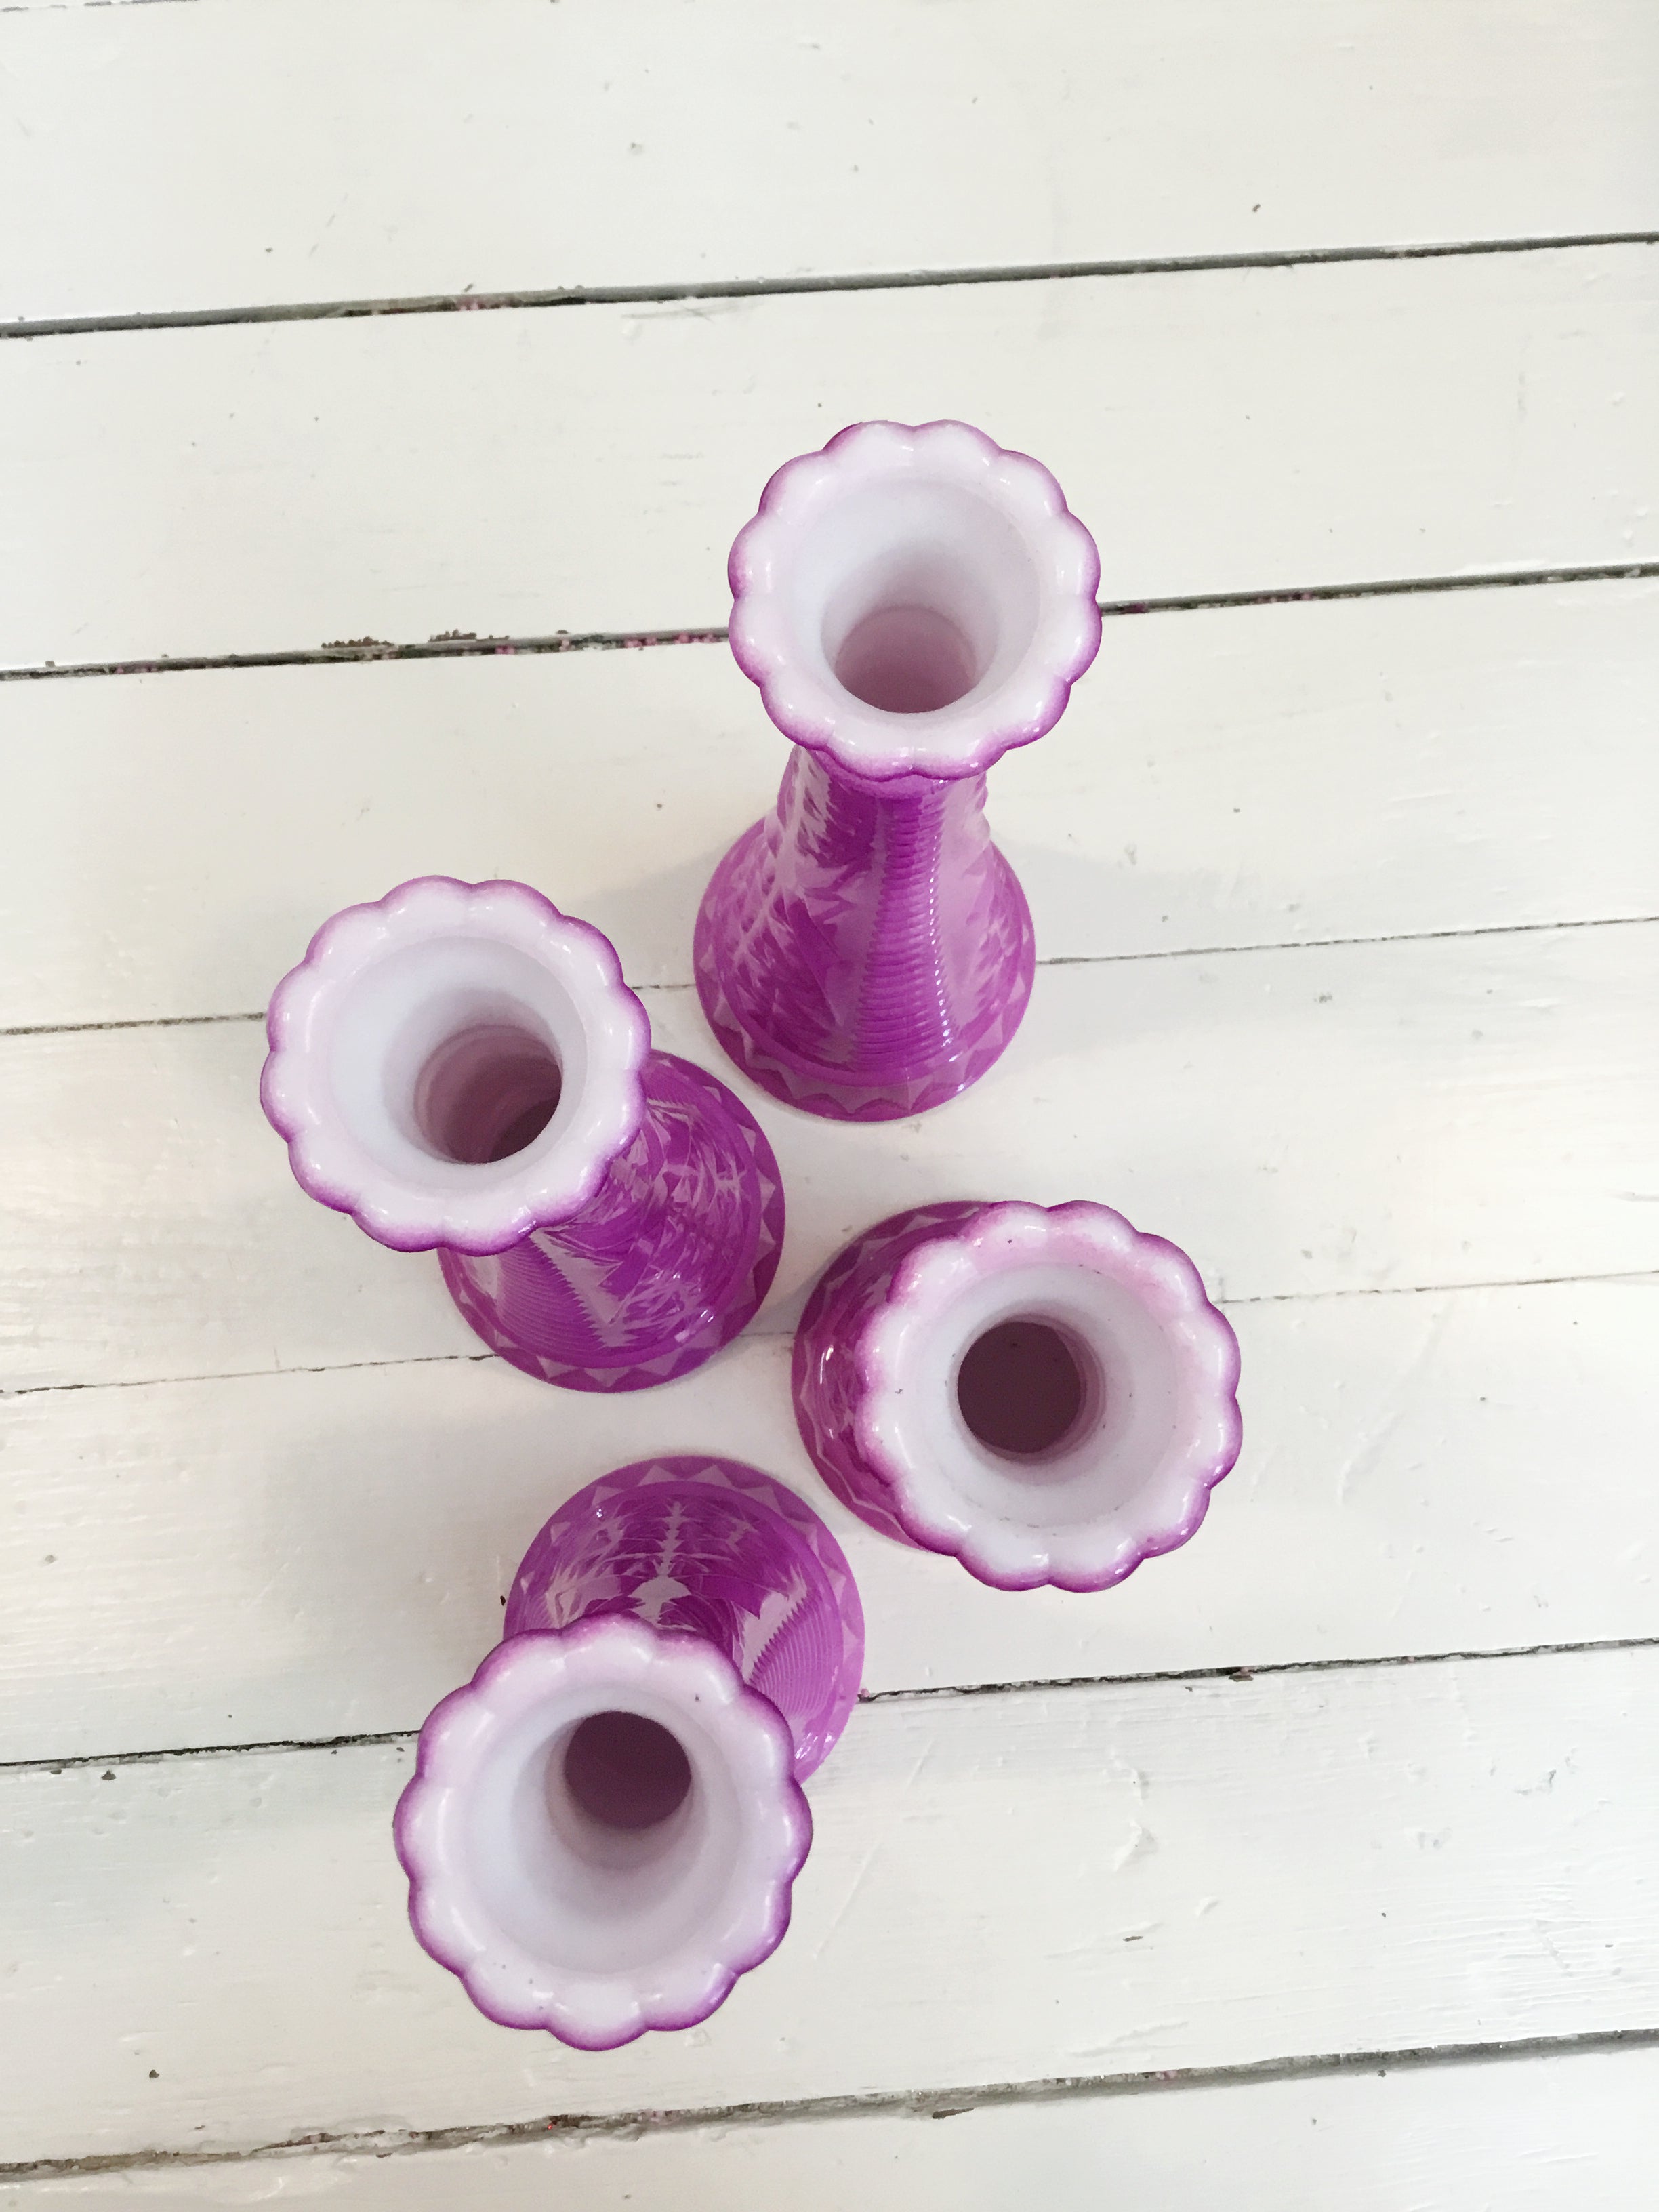 Bright Purple Glass Vases